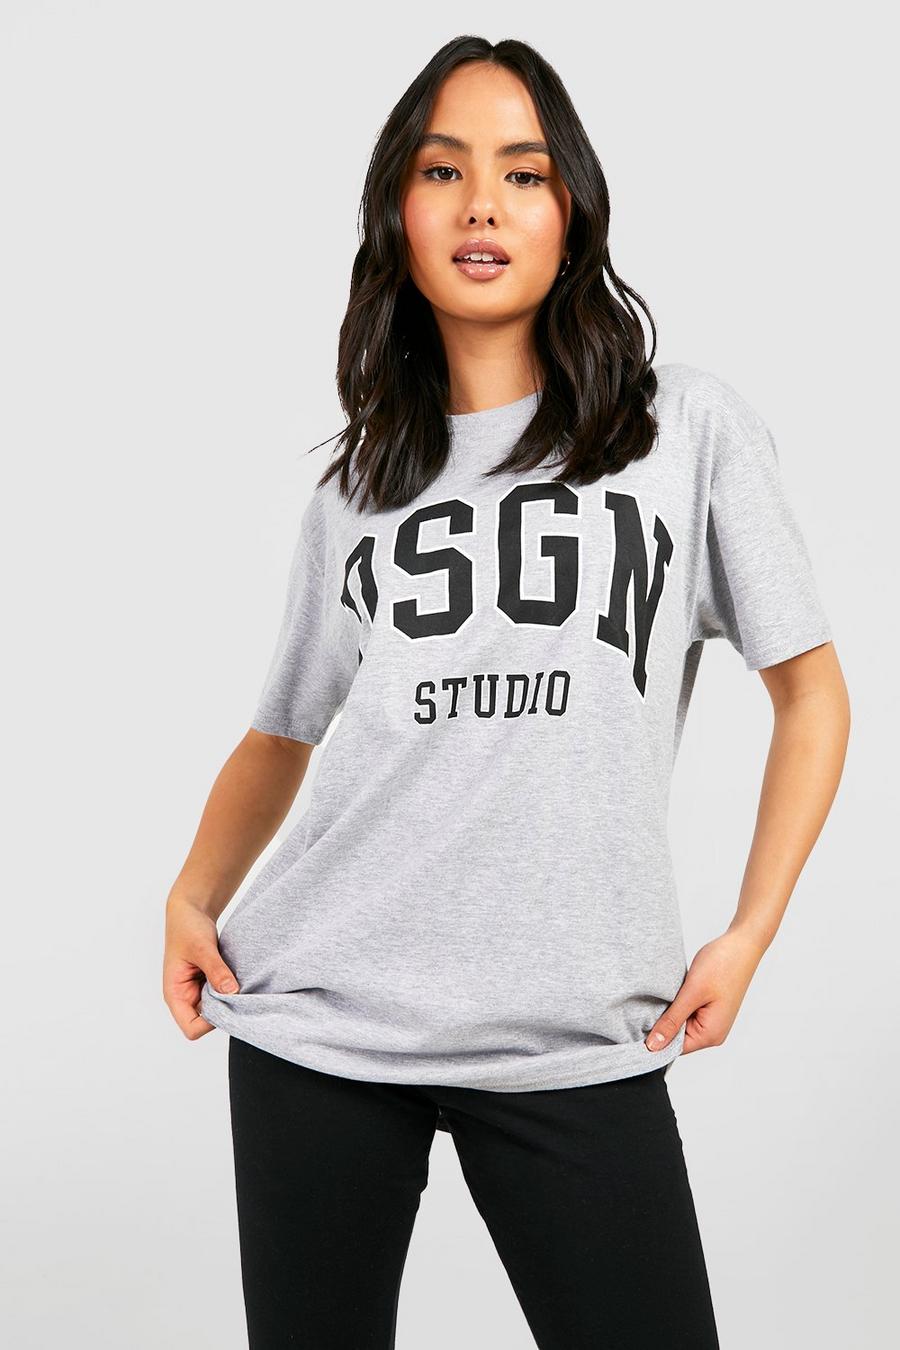 Camiseta oversize con eslogan Dsgn Studio, Grey grigio